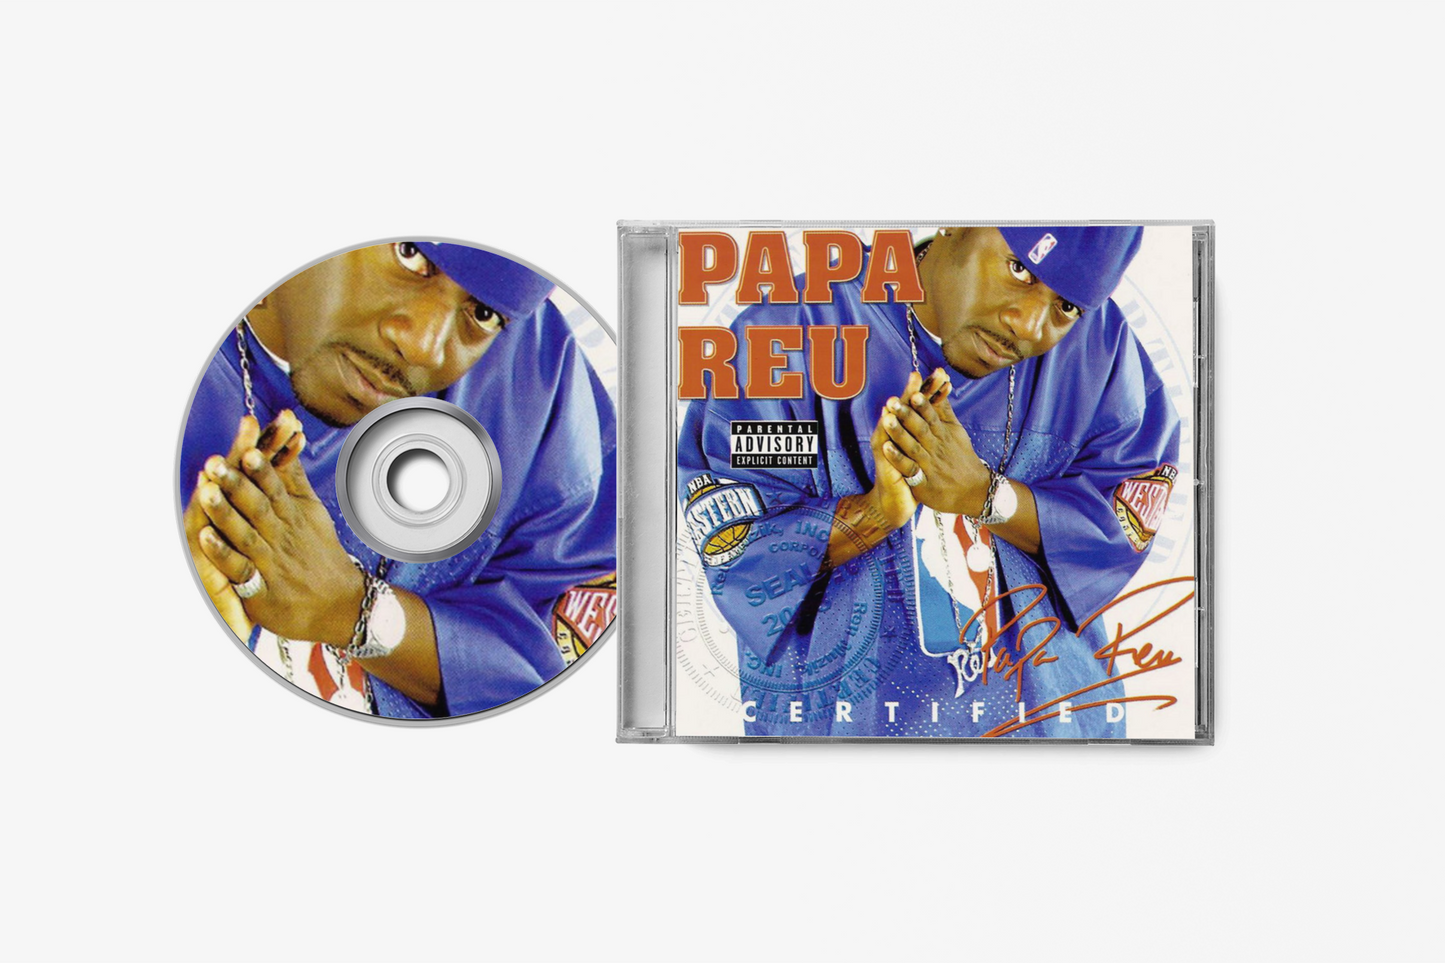 Papa Reu "Certified" Album on CD.